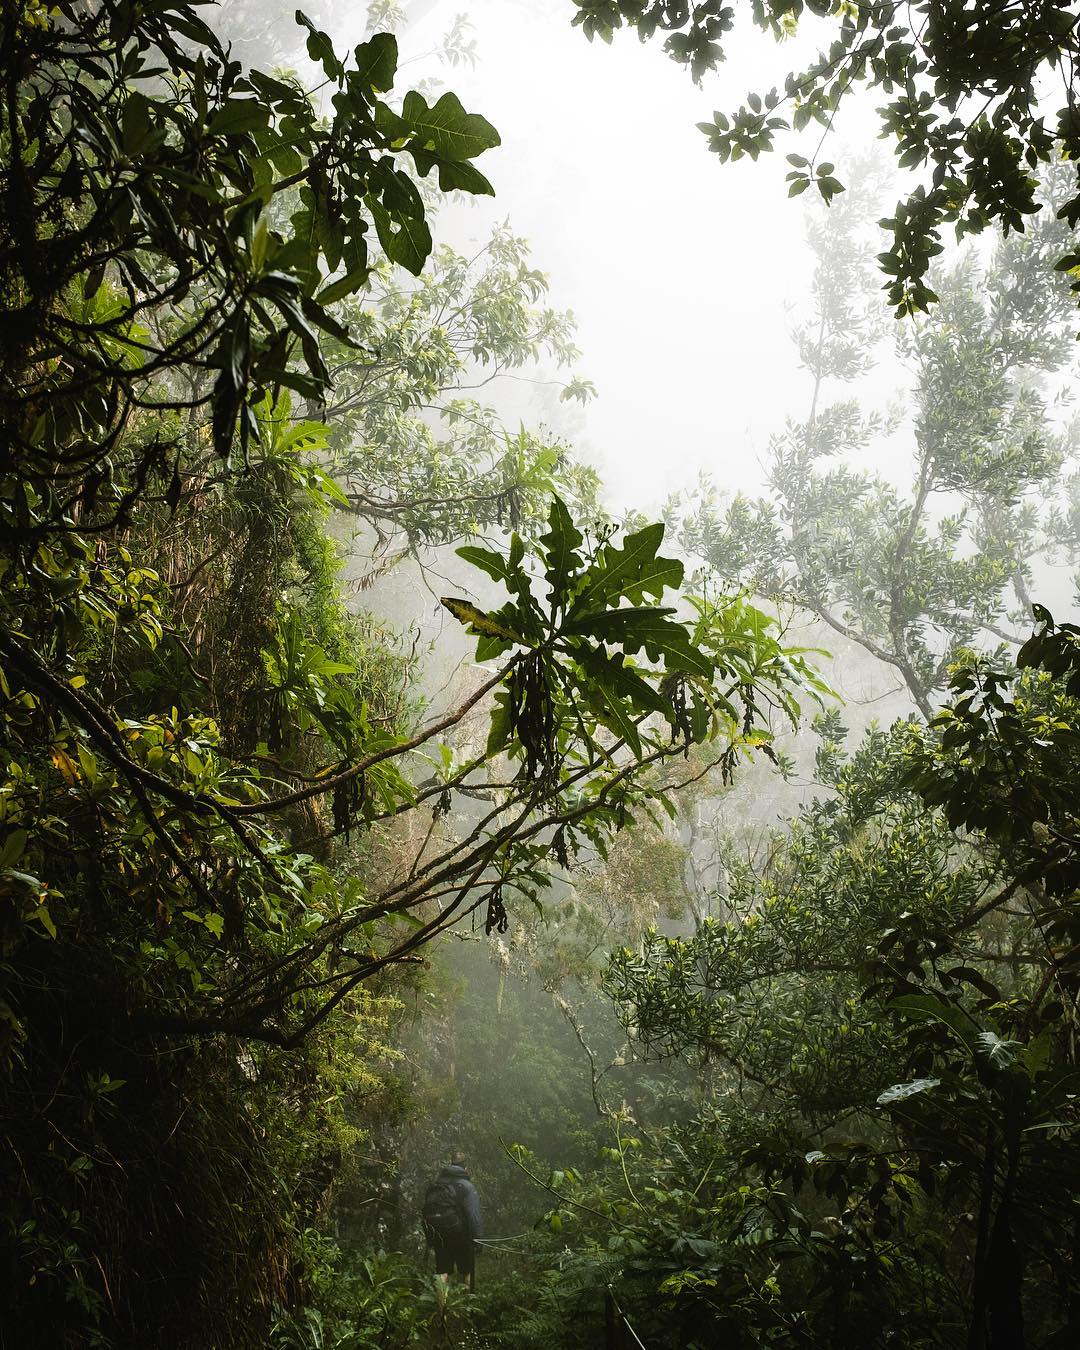 Bloudit random v jungli se stalo pro mě závislostí 🌴🌿
——————————-
Random walking through the jungle become like piece of drug for me.
🌴🌿
#budvdecny#tyjsitentvurce#denikcoffeeholika .
.
.
.
.
.
.
.
@visitmadeira 
#profotkudoraje#zijusisvujsen#meditation#nature#mountains#fujifilm#landscape#hike#forest#jungle
#beautyofnature#landscapehunter#EarthOfficial#roamtheplanet#keepitwild#theglobewanderer#earthfocus#ourplanetdaily#stayandwander#folkvibe#jungle#foggy#czechexplorers#zijusisvujsen#neverstopexploring#bestmountainartists#czechroamers 
@visitmadeira
@visitmadeiraofficial
@lonelyplanet 
@natgeoyourshot 
@fujifilmcz
@fujifoto.cz
@ikoktejlcz 
@artofvisuals